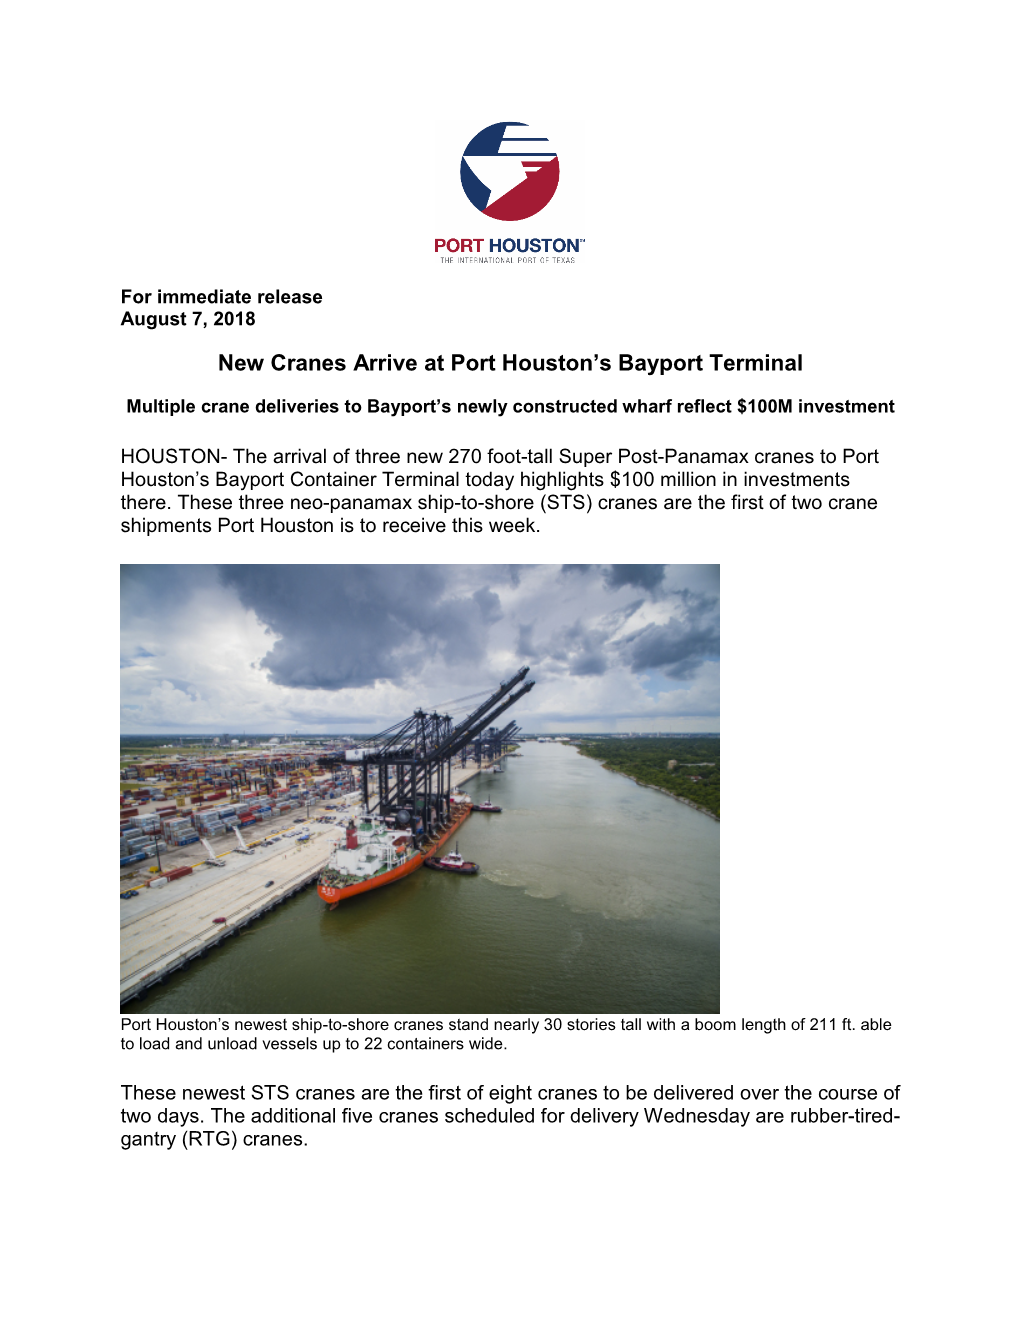 New Cranes Arrive at Port Houston's Bayport Terminal